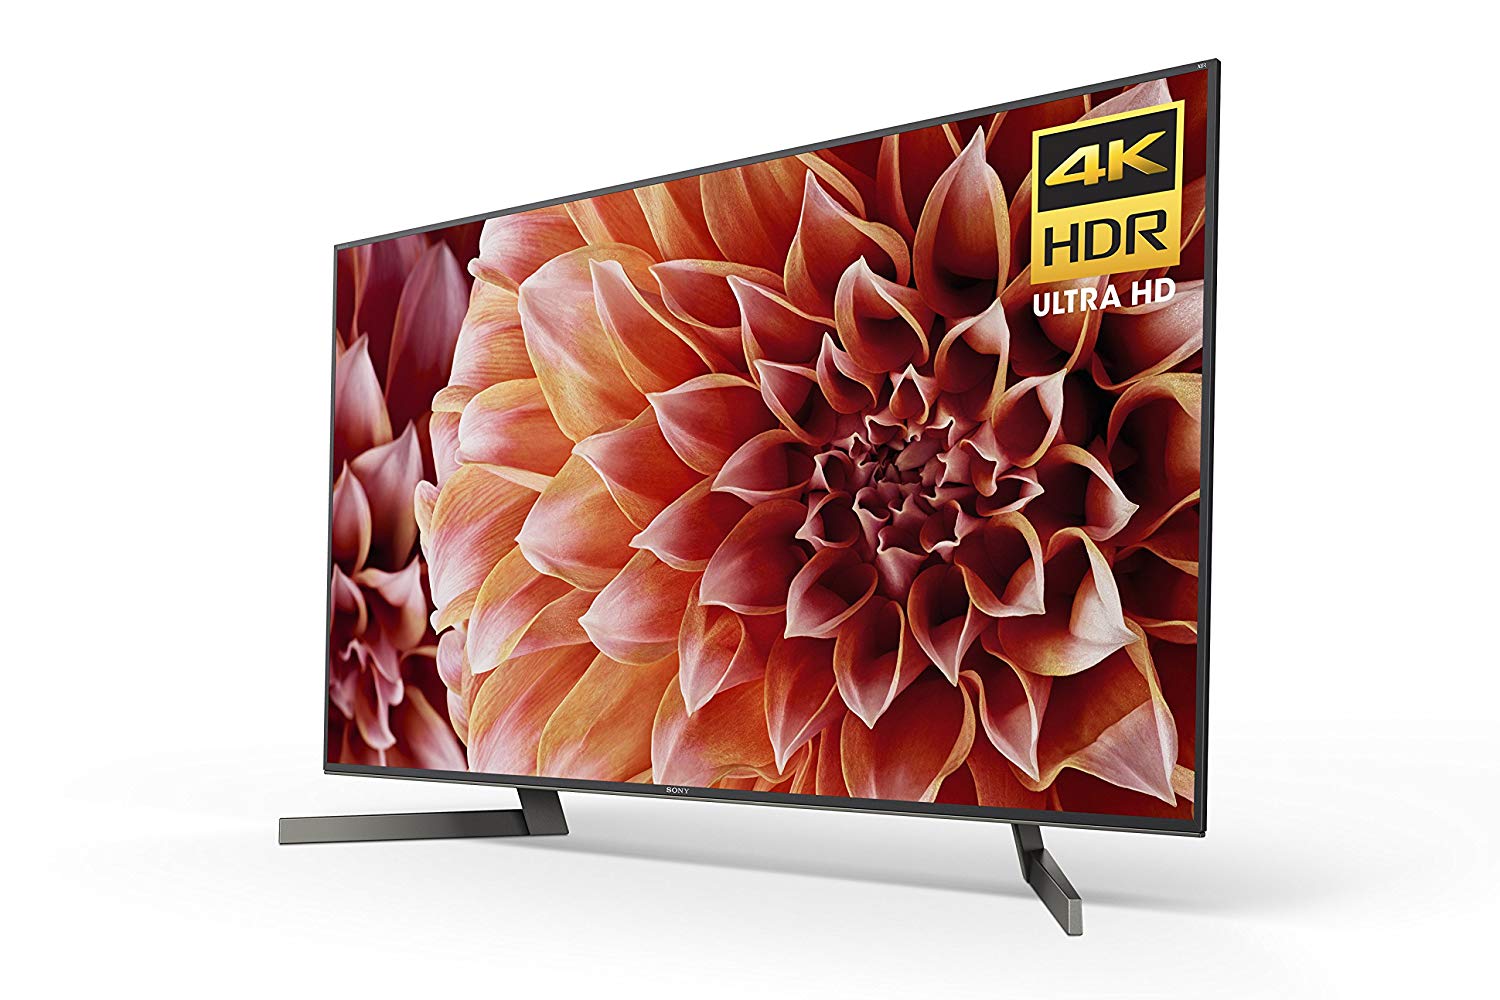 Sony XBR55X900F 55-Inch 4K UHD HDR Smart LED TV (2018 Model)